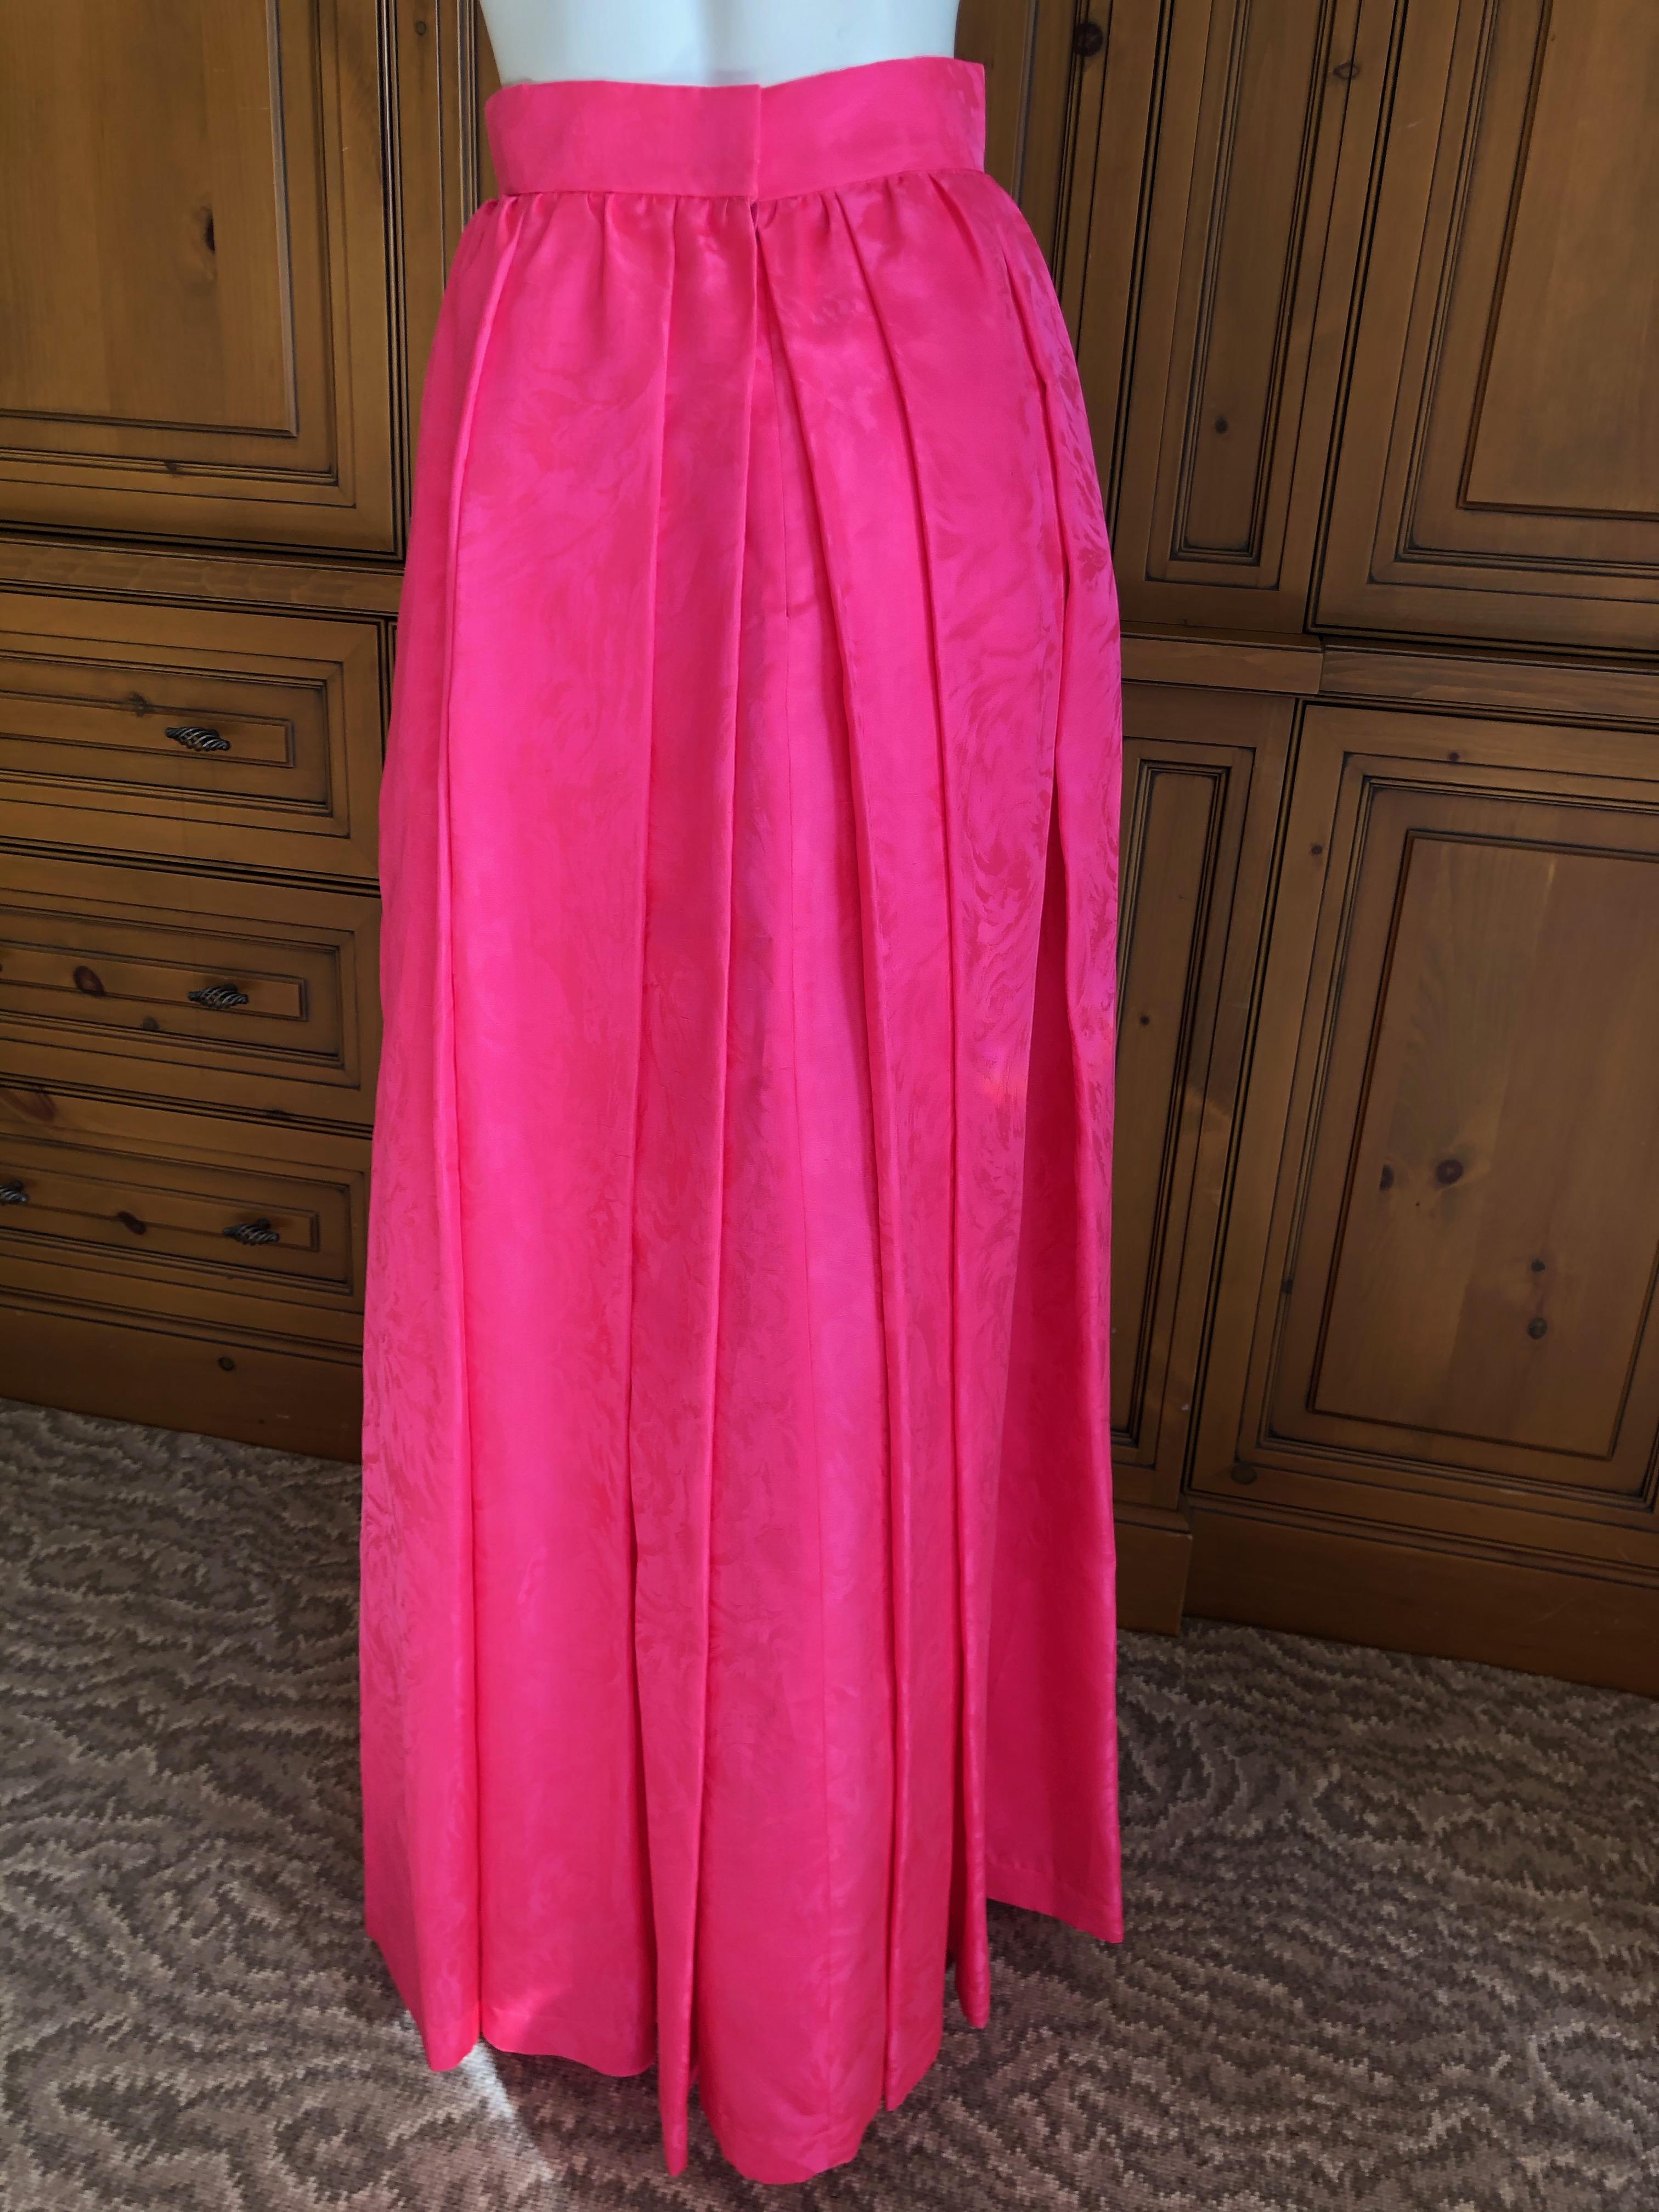 Yves Saint Laurent Rive Gauche Vintage 70's Pink Silk Faille Ball Skirt Pockets For Sale 3